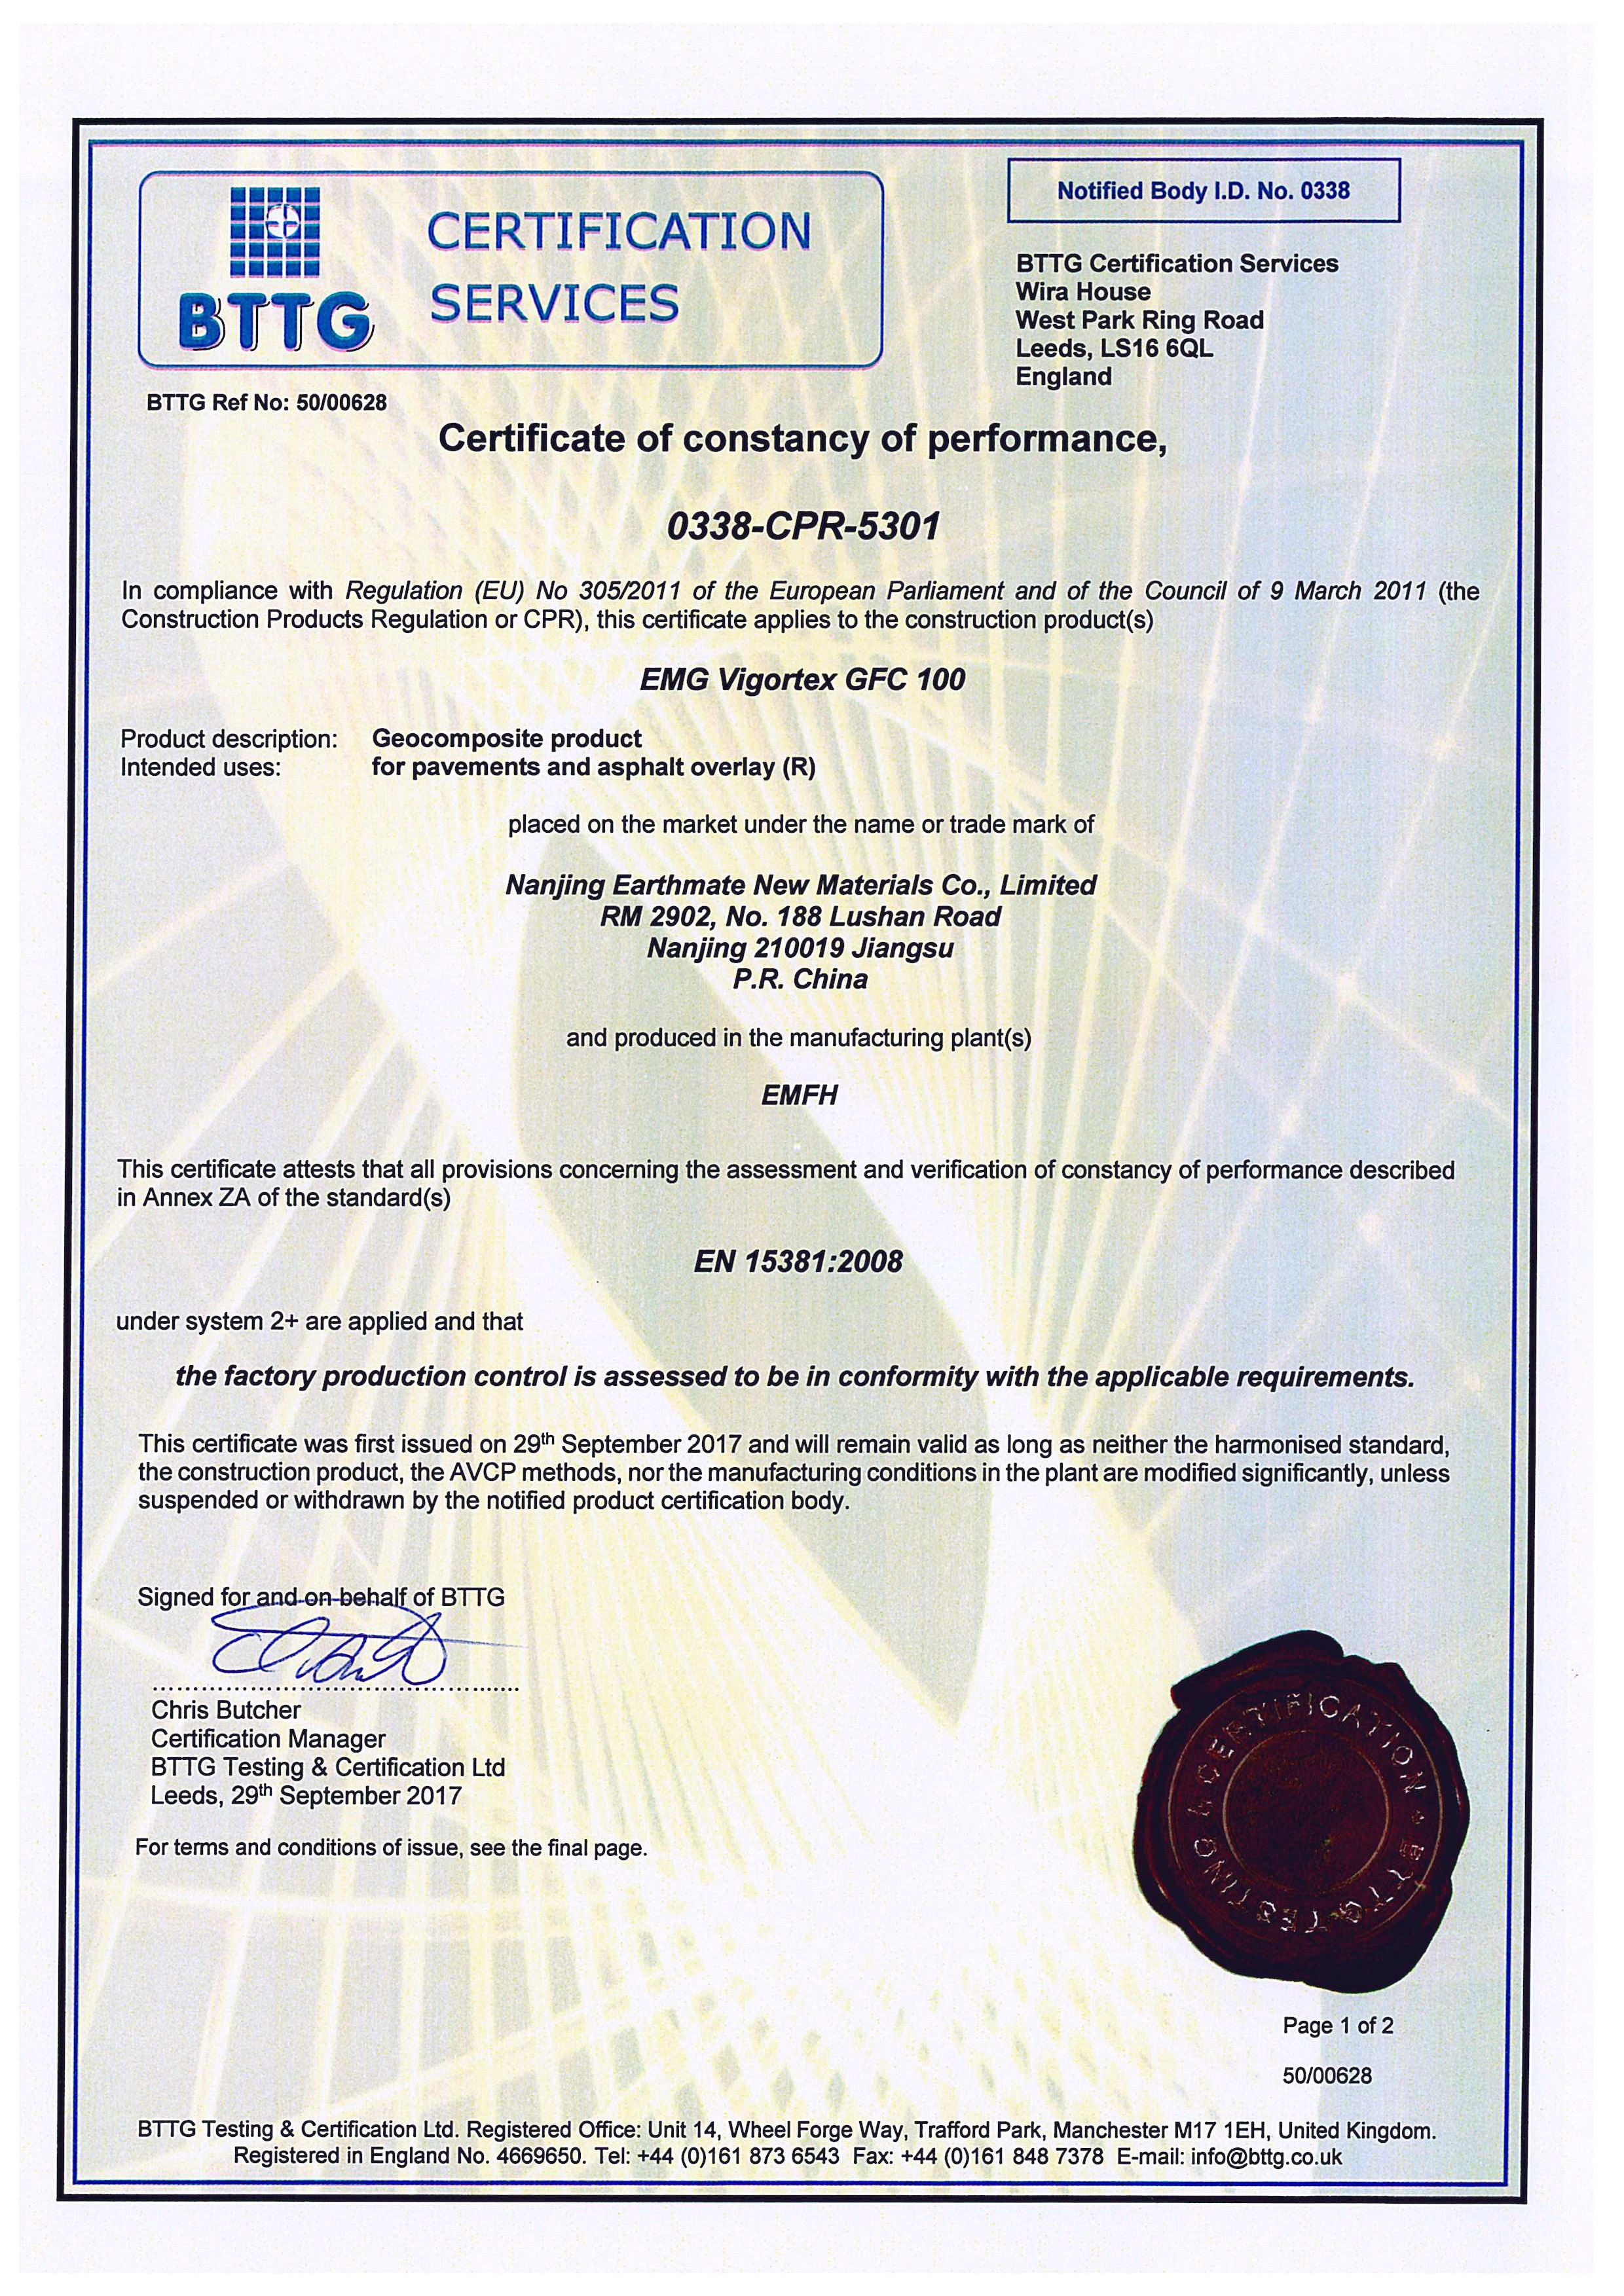 VIGORTEX GFC CE Certificate of Conformity | BTTG, U.K.